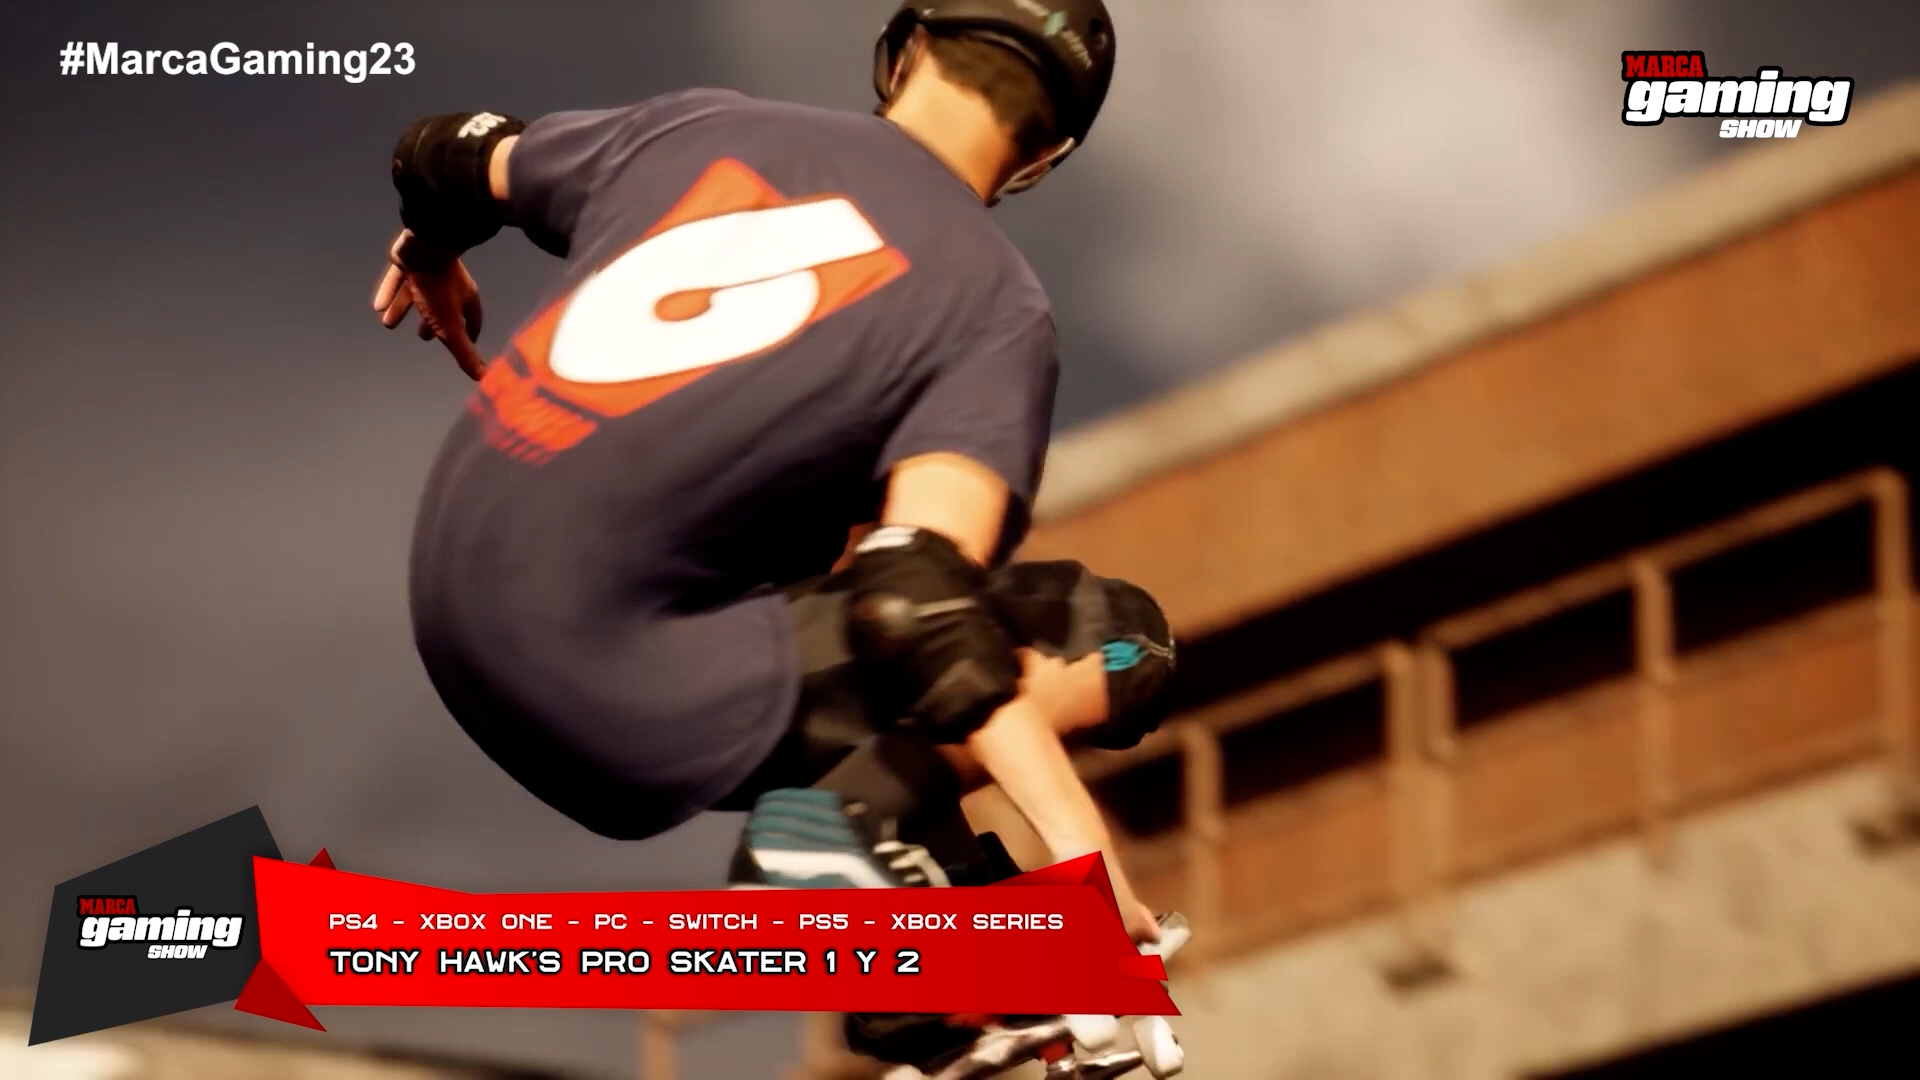 Tony Hawk's Pro Skater 1 y 2 (PS5, Xbox Series)